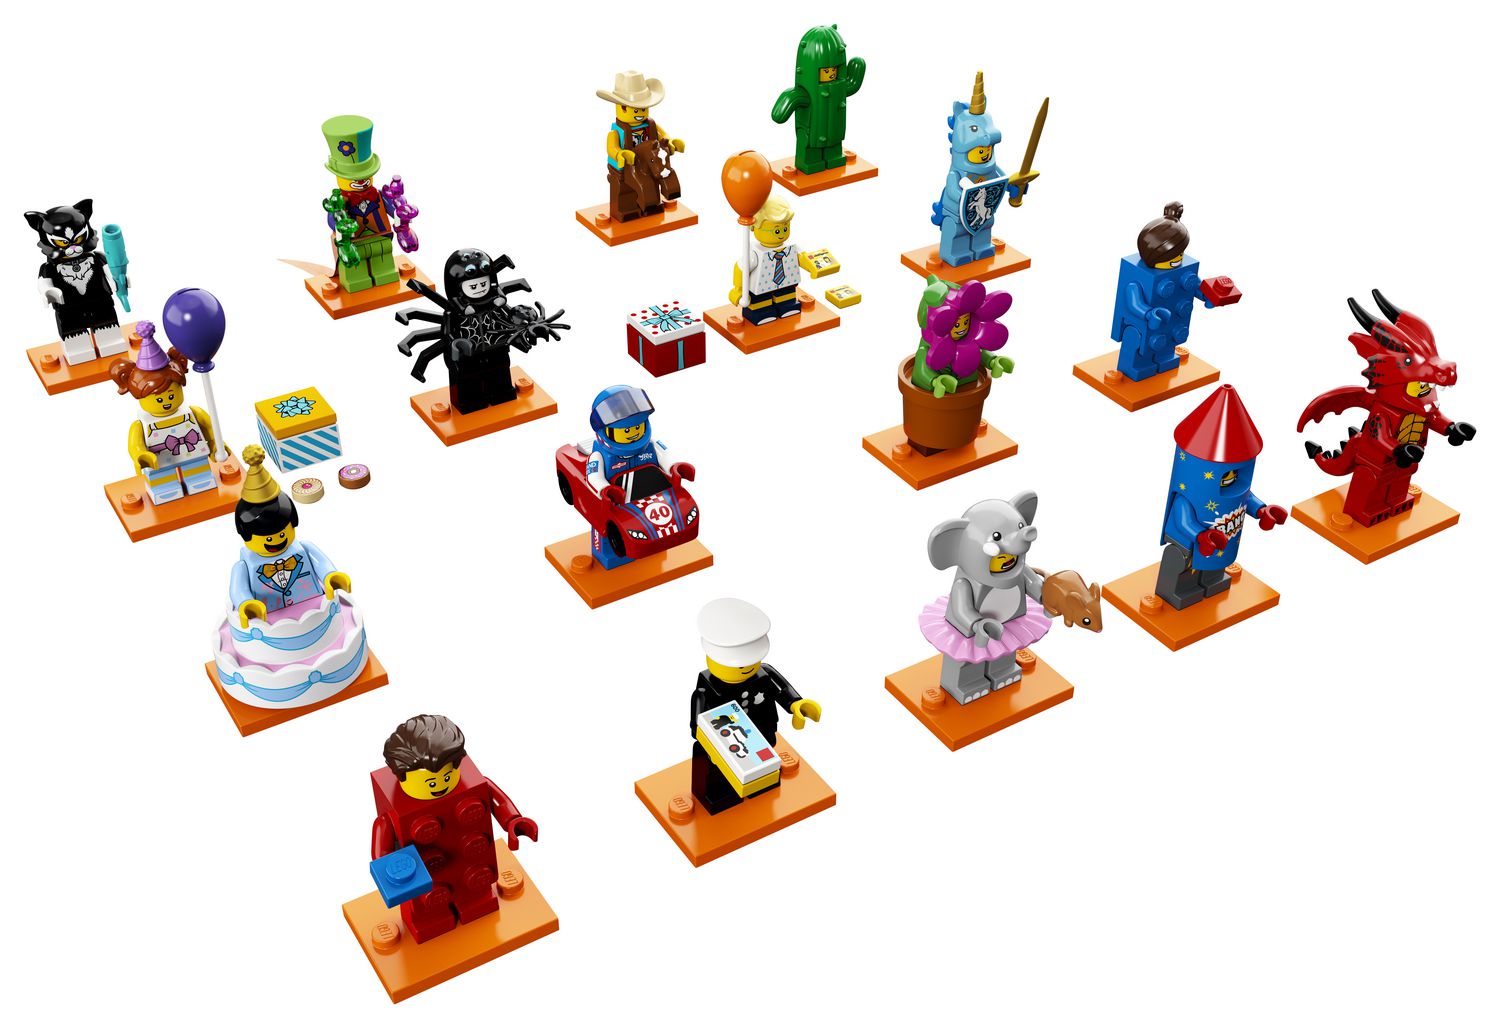 LEGO Minifigures - Series 18: Party (71021) - Walmart.ca